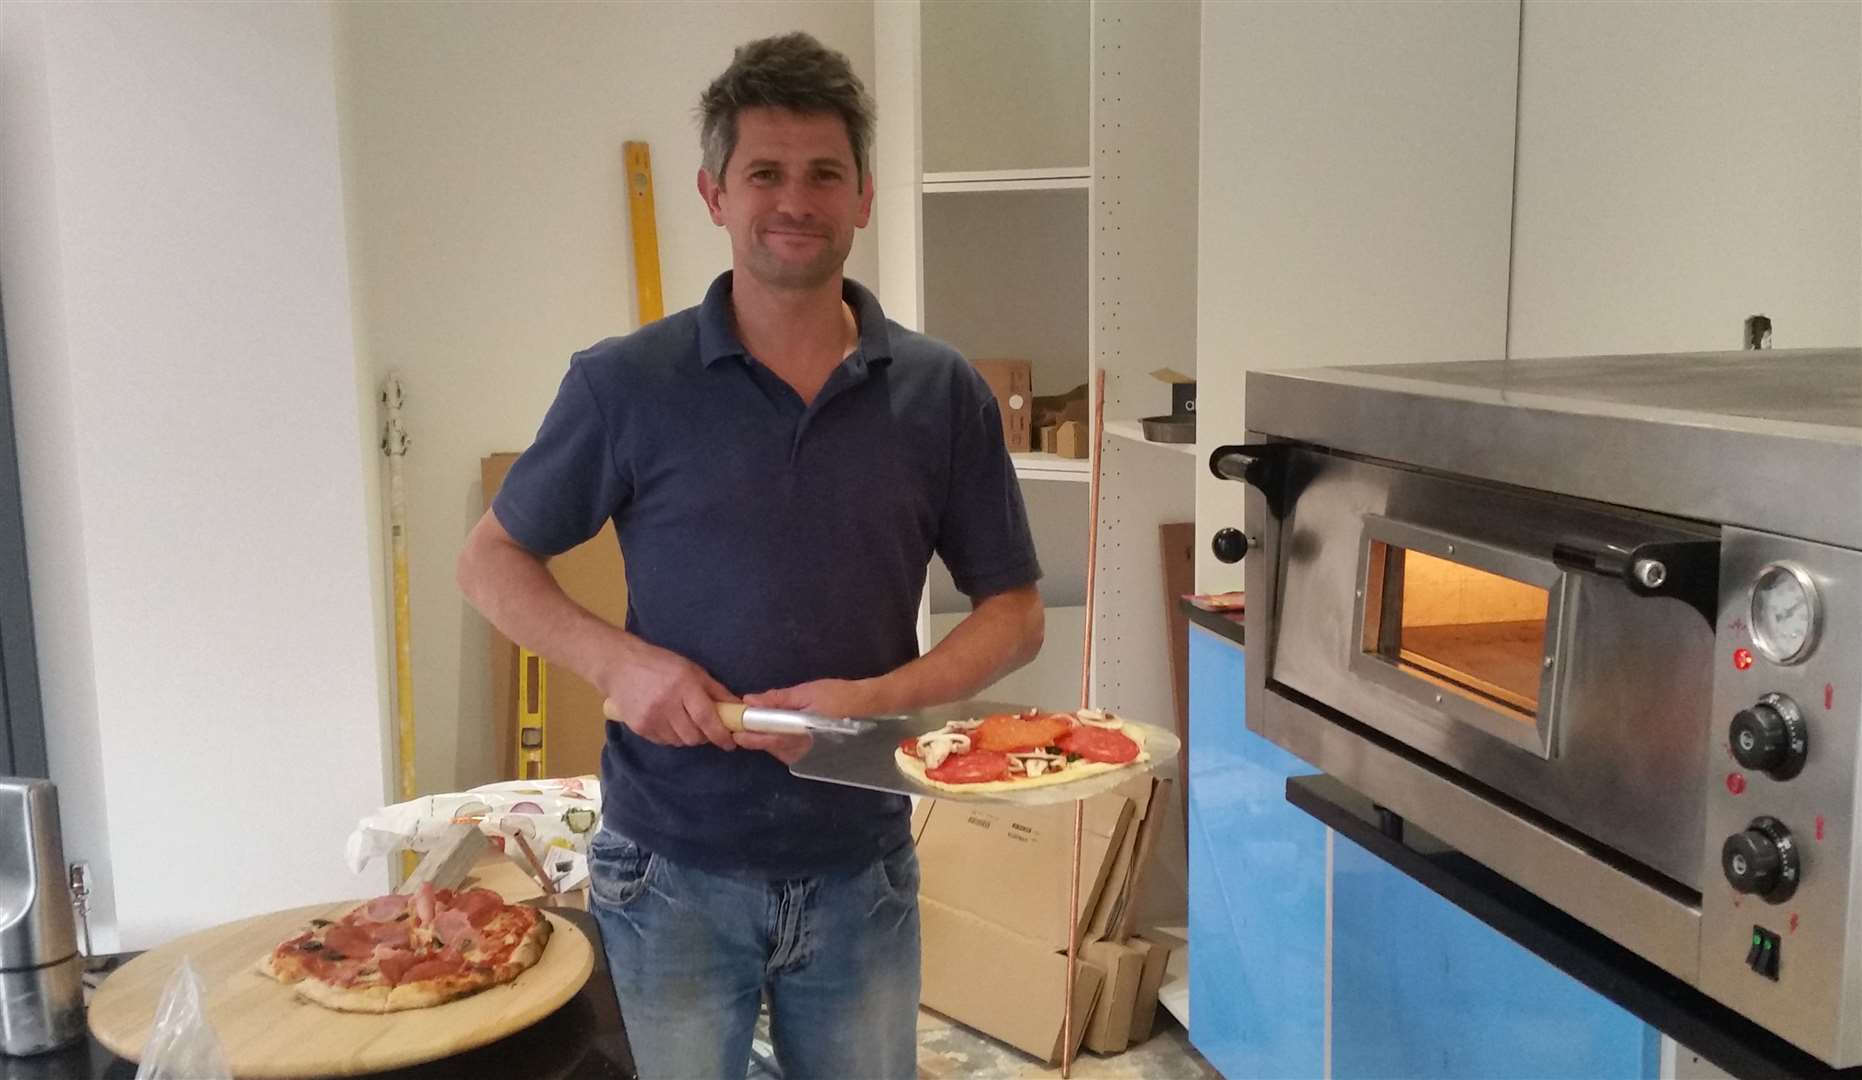 Ian Parris wants to open a pizza takeaway